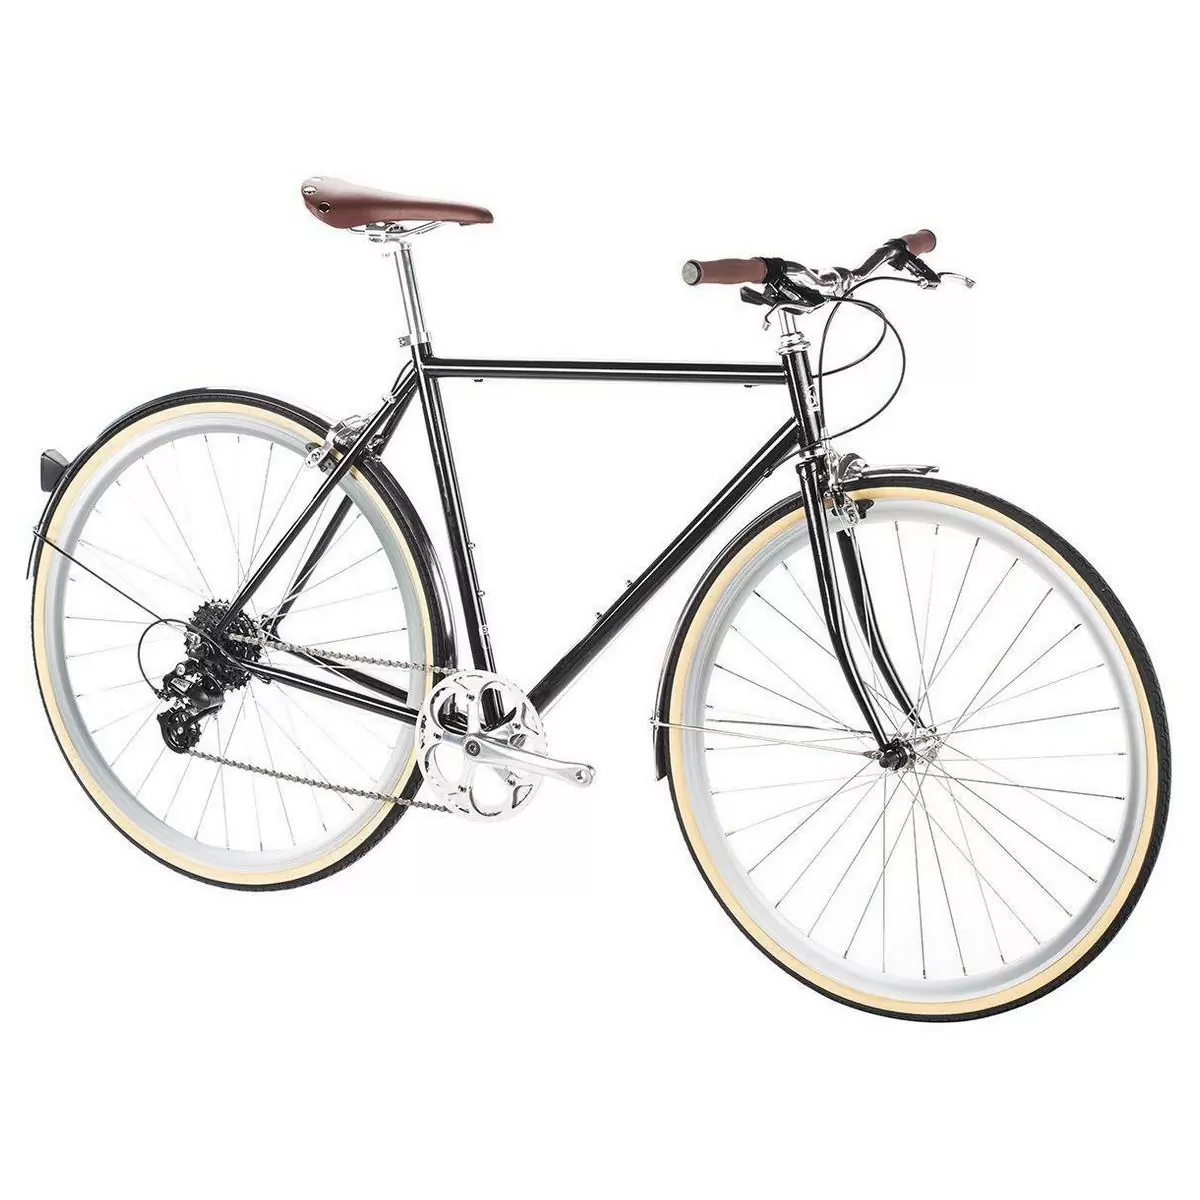 Bicicleta urbana ODYSSEY 8v Delano negra grande 58cm #1